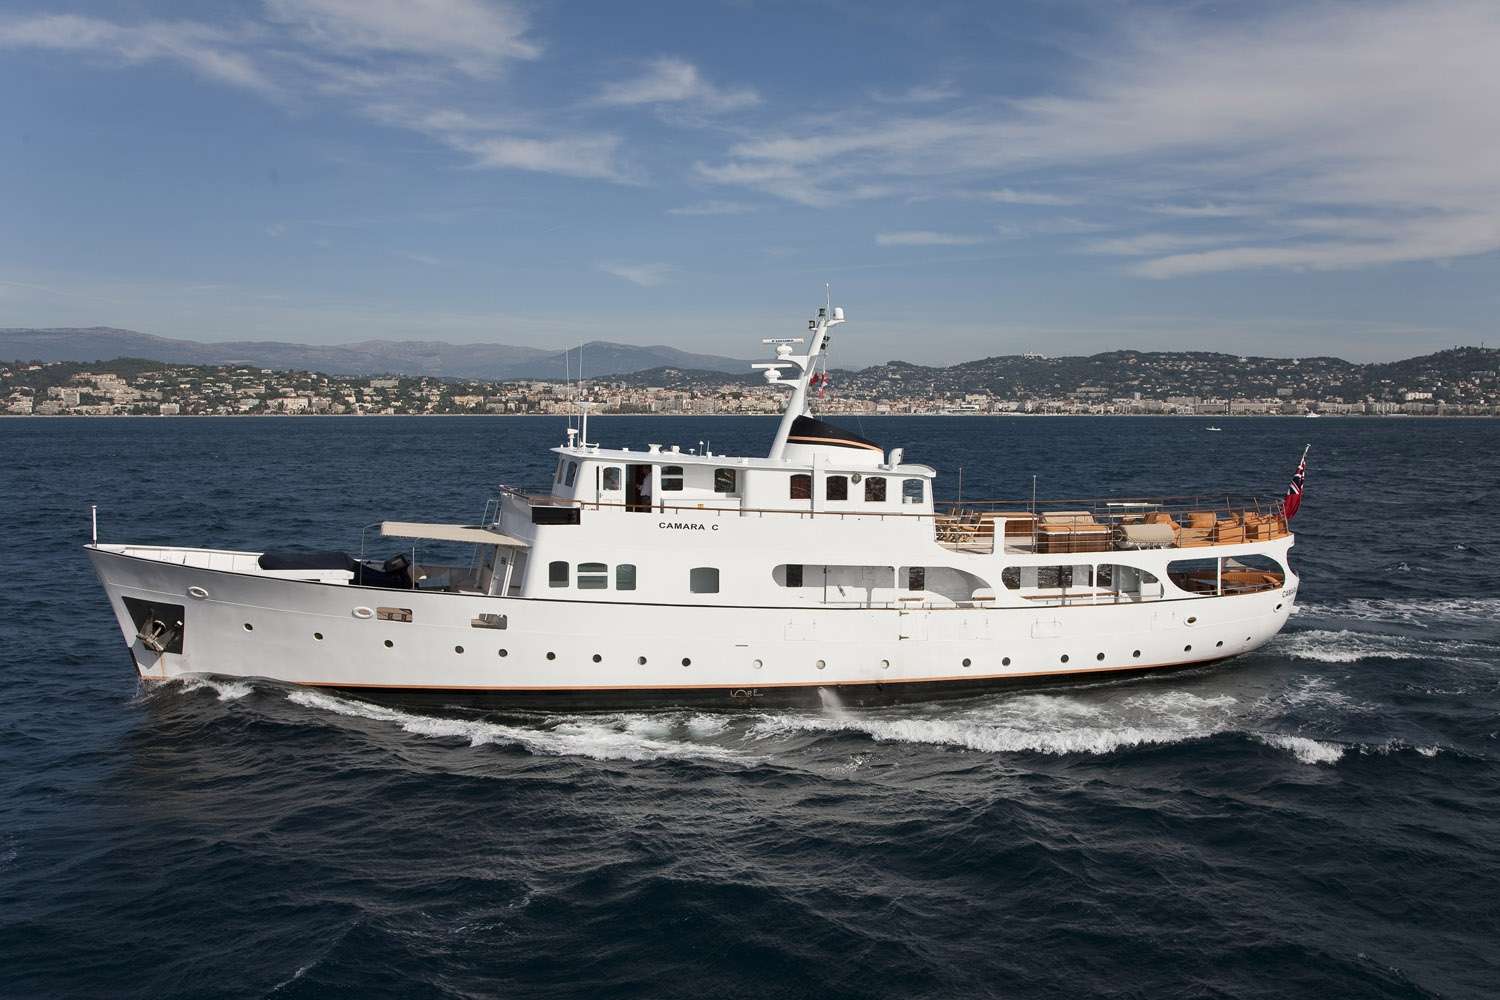 camara c - Luxury yacht charter Maldives & Boat hire in Indian Ocean & SE Asia 1